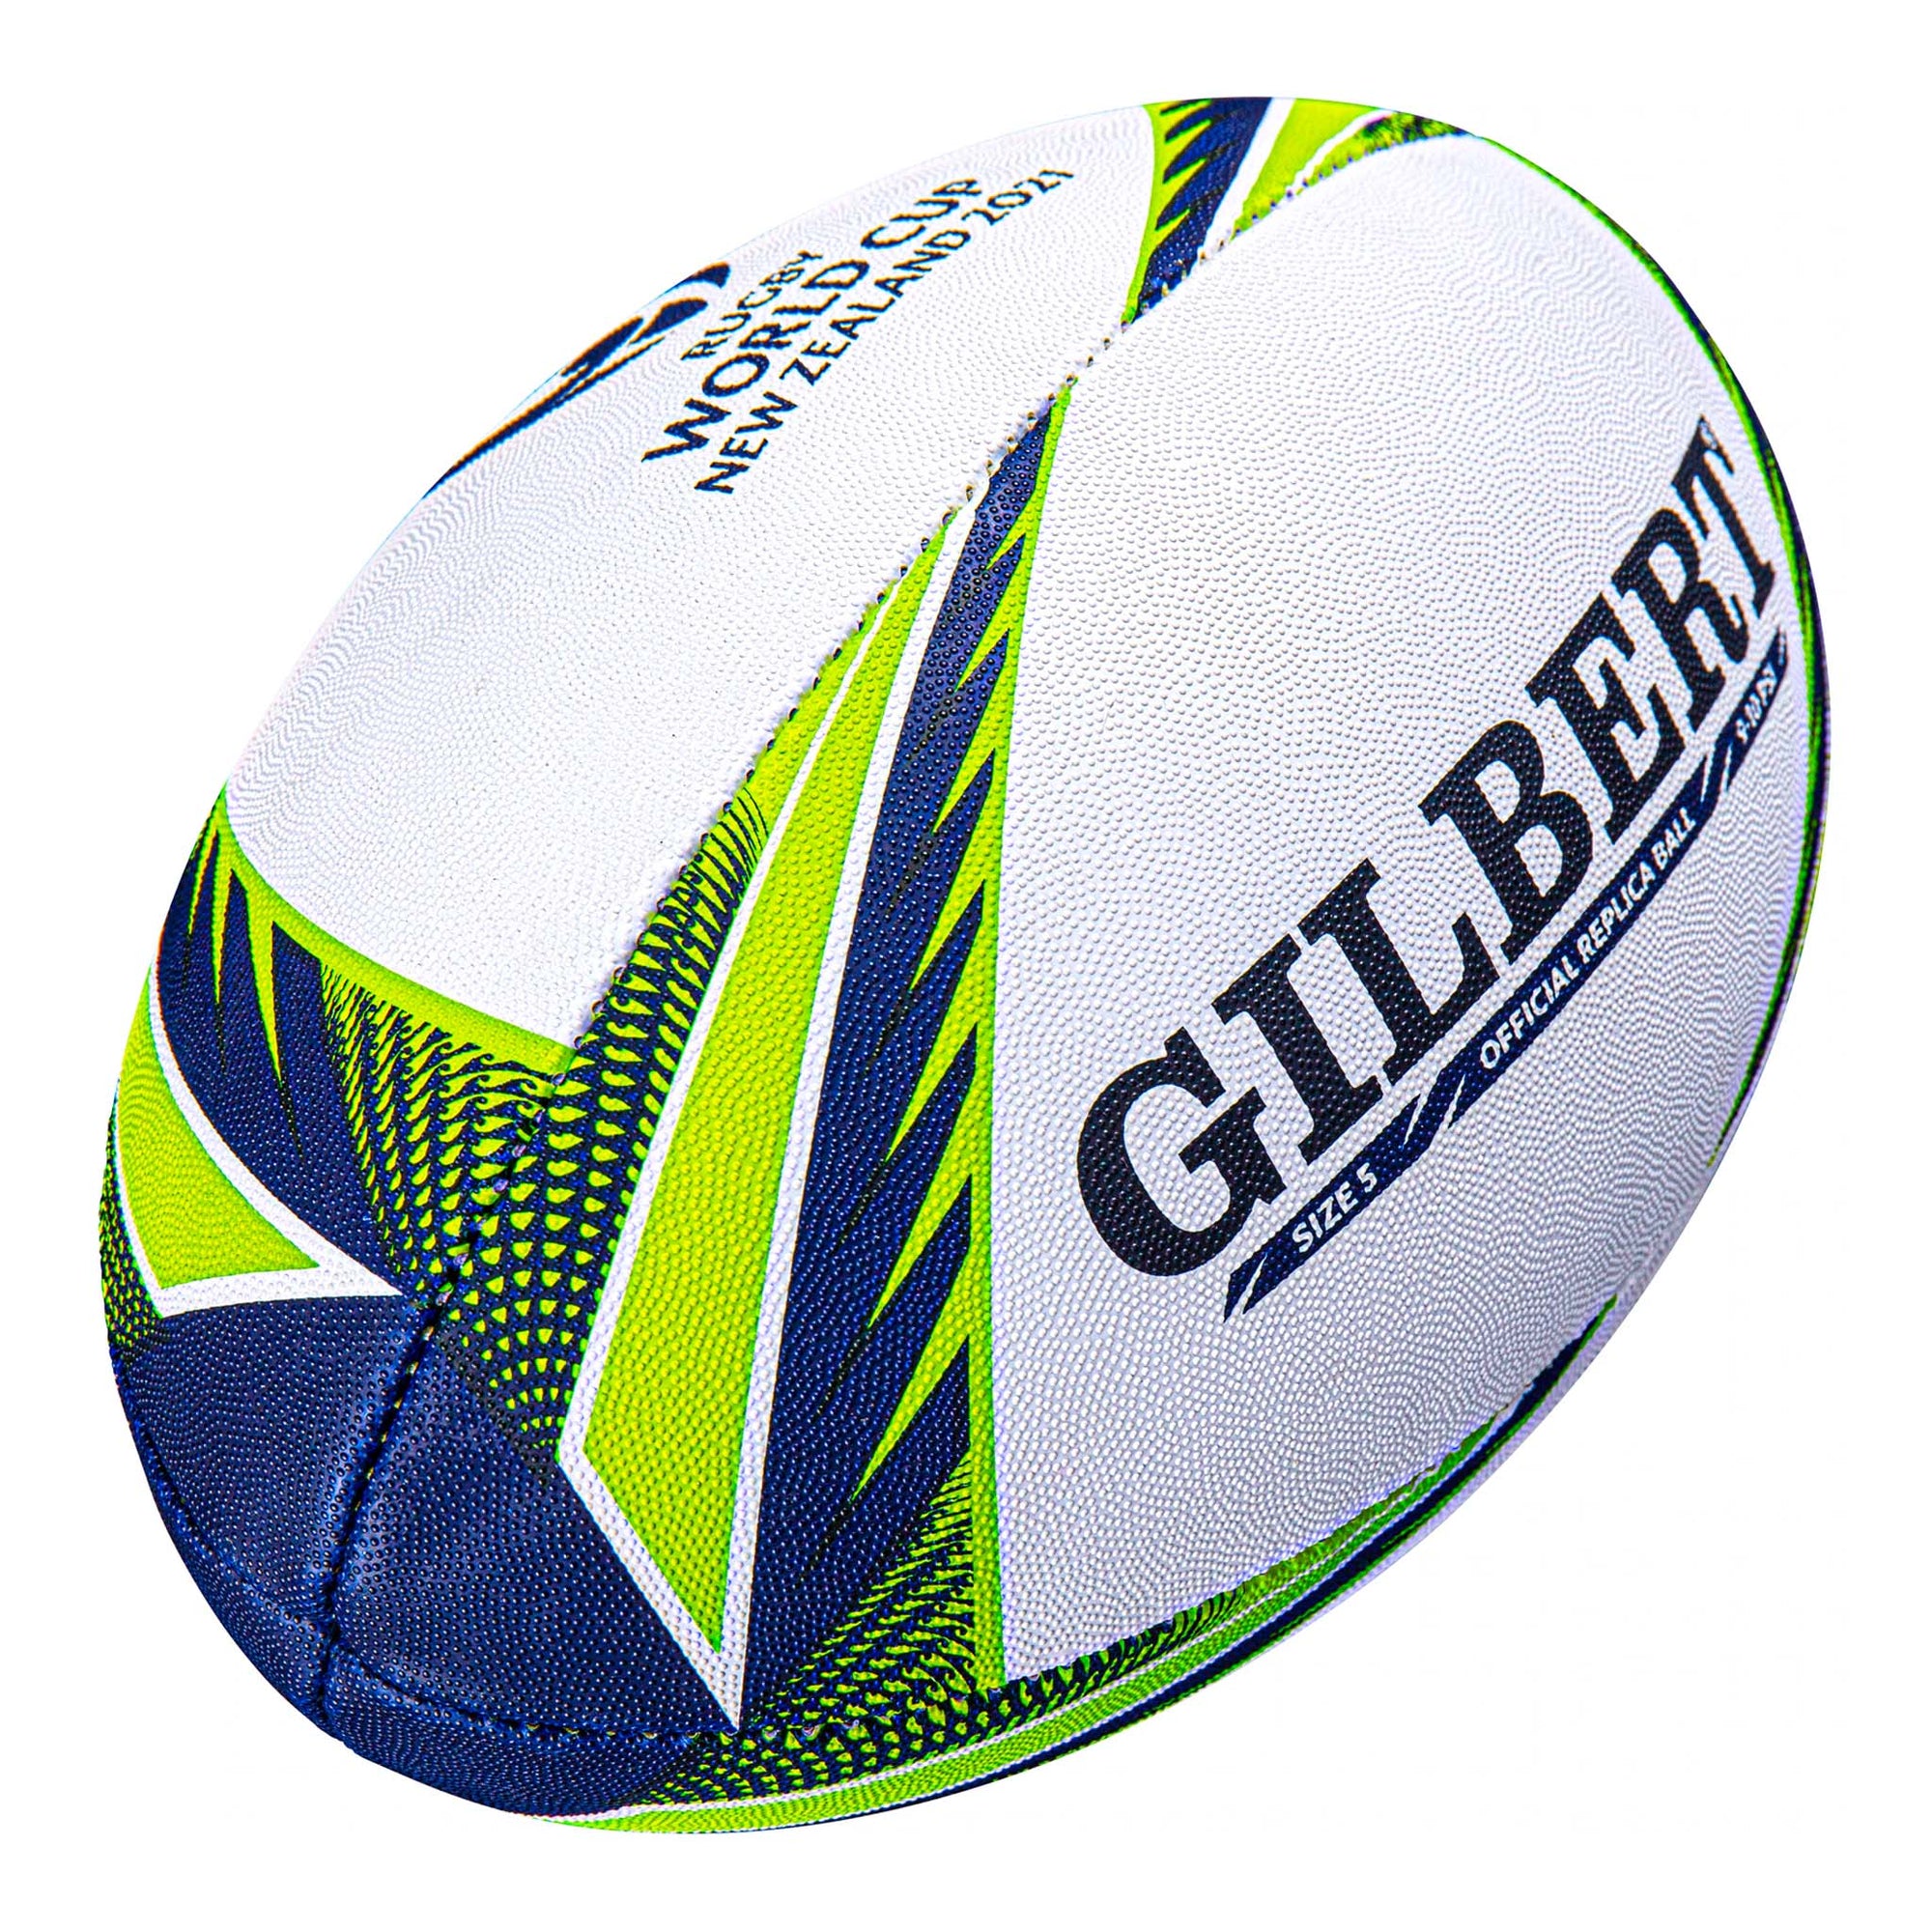 Gants – Gilbert Rugby France